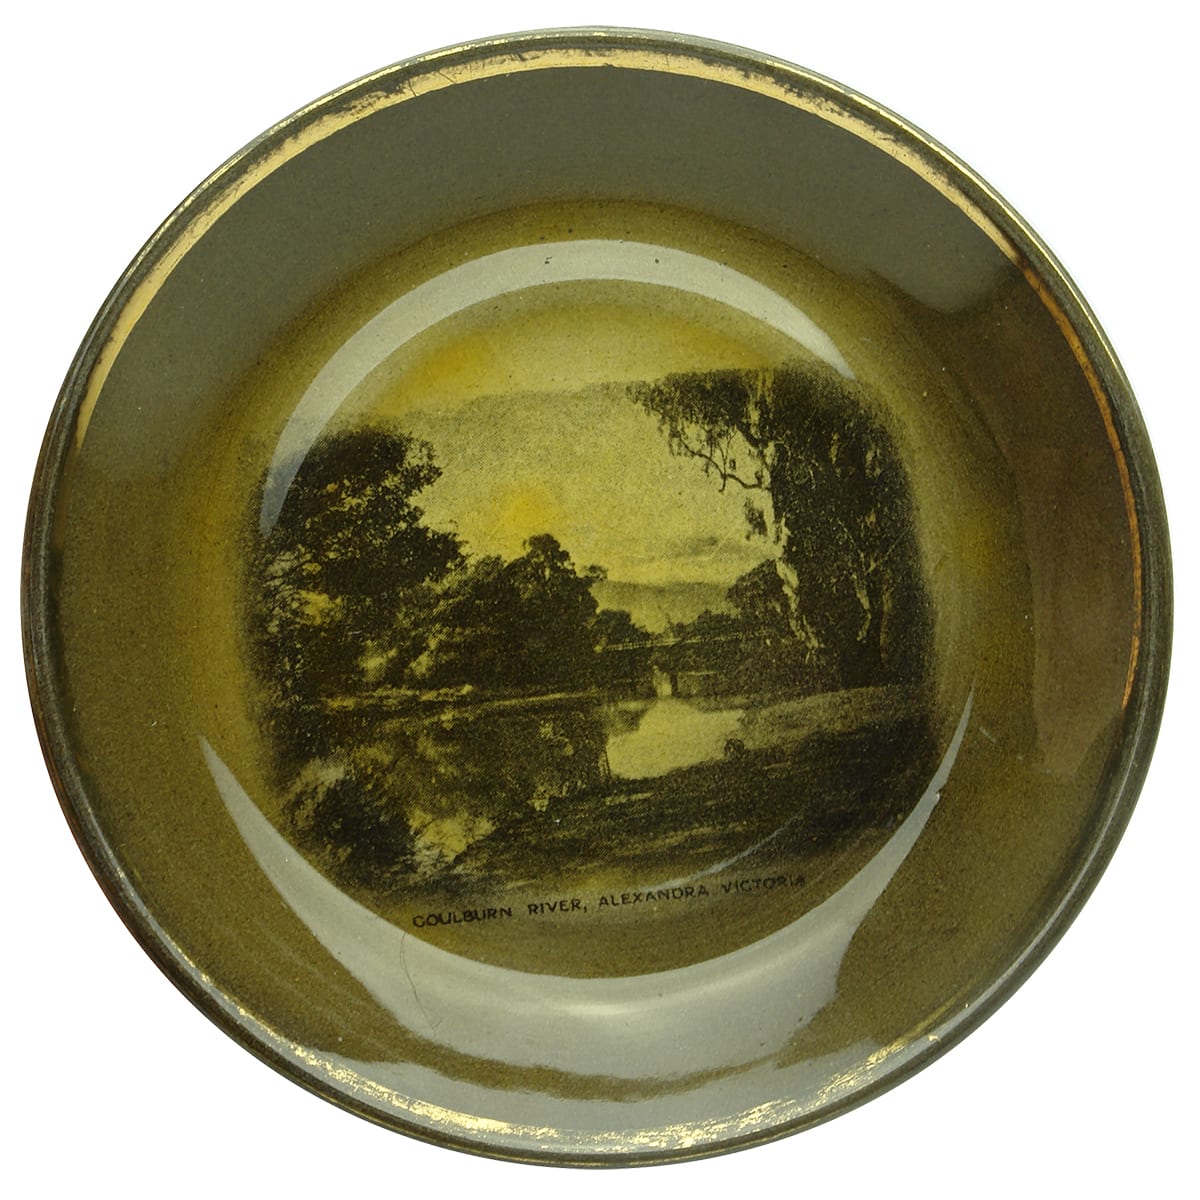 Souvenirware plate. Goulburn River, Alexandra.